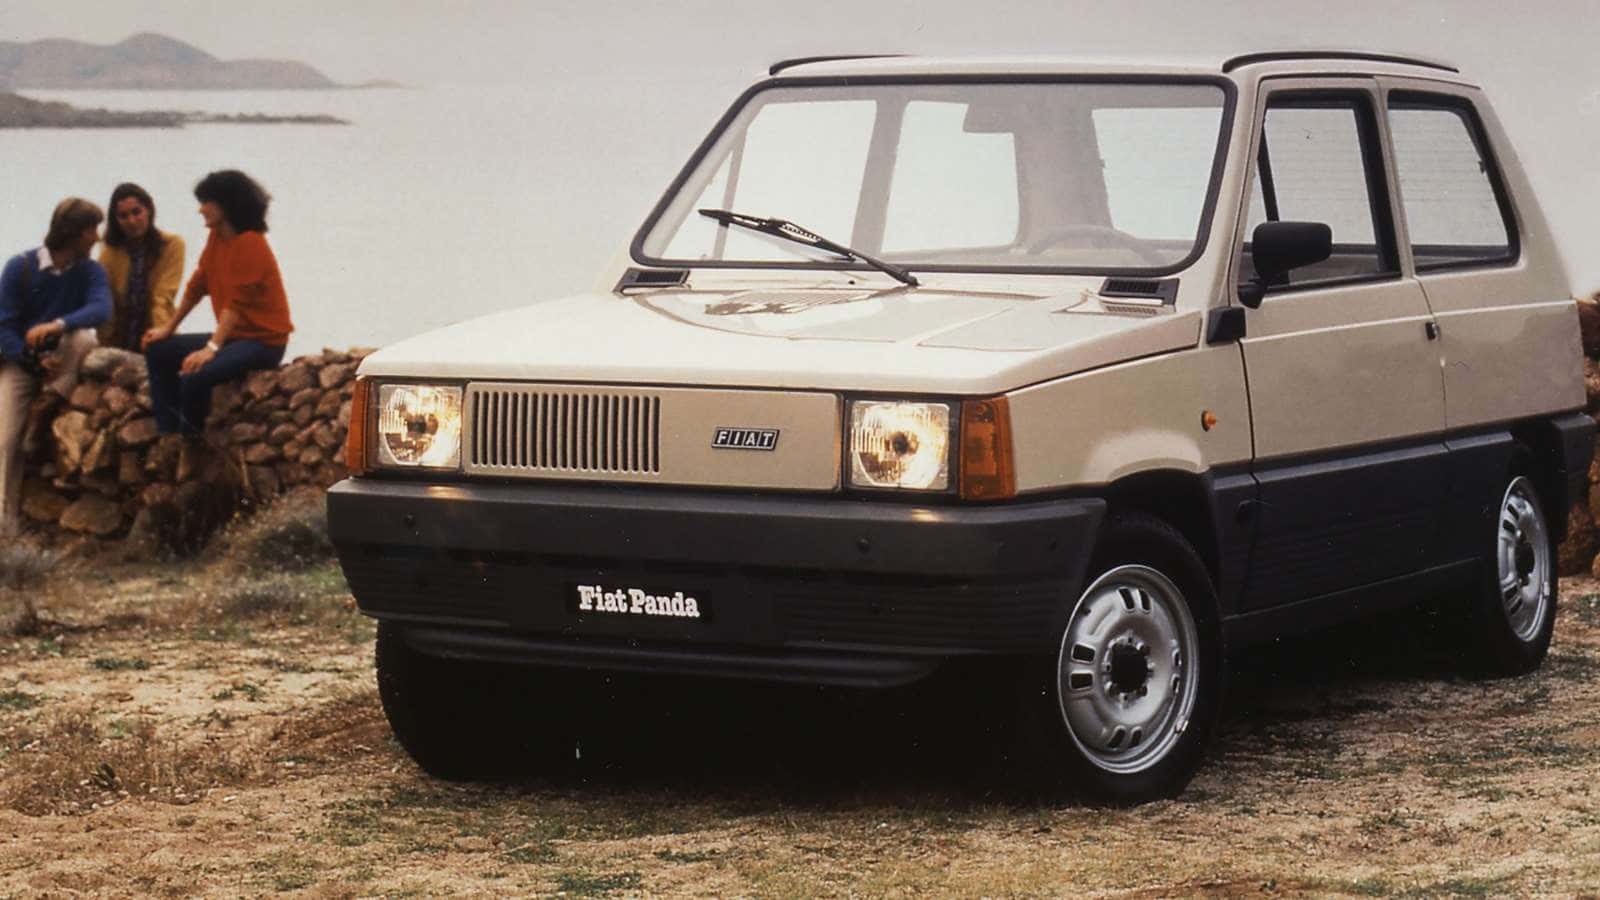 Fiat500 - Anúncio - Tv - Tv - Tv - Tv - Tv